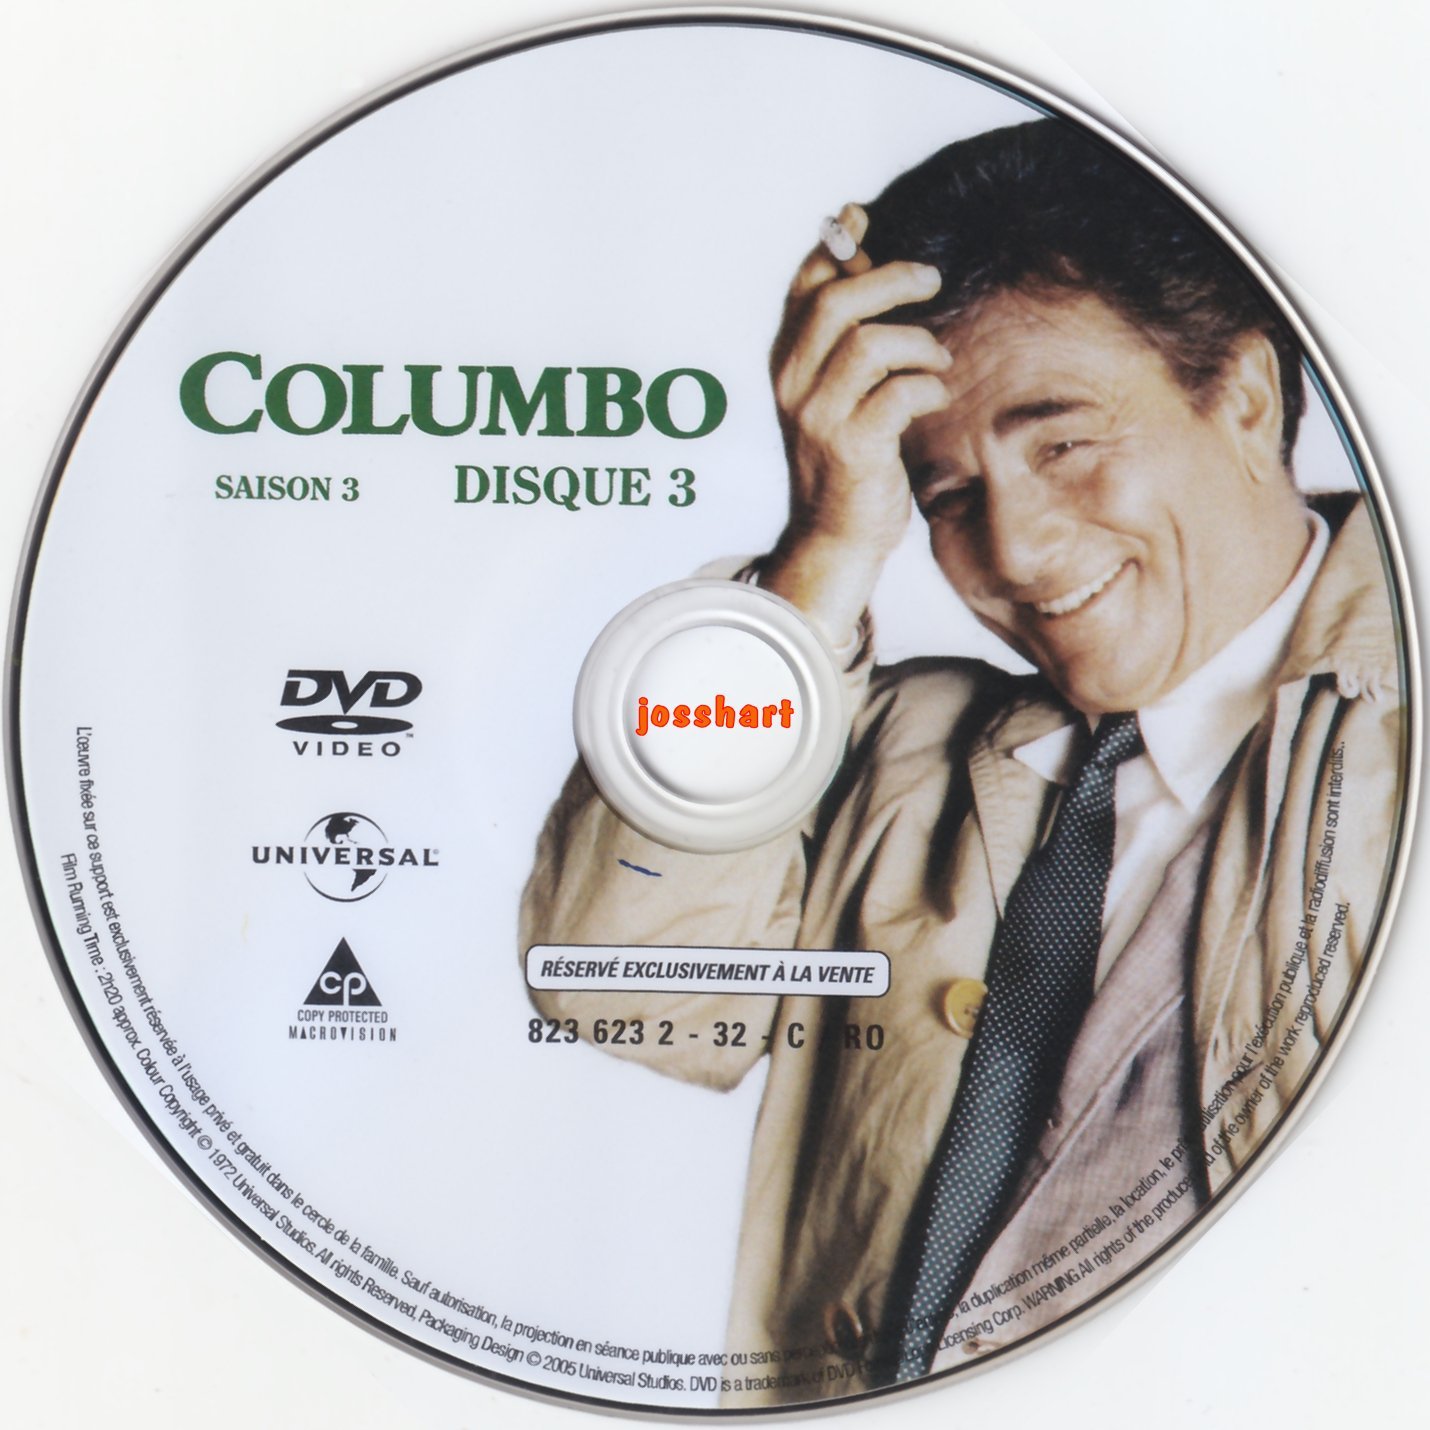 Columbo S3 DISC3